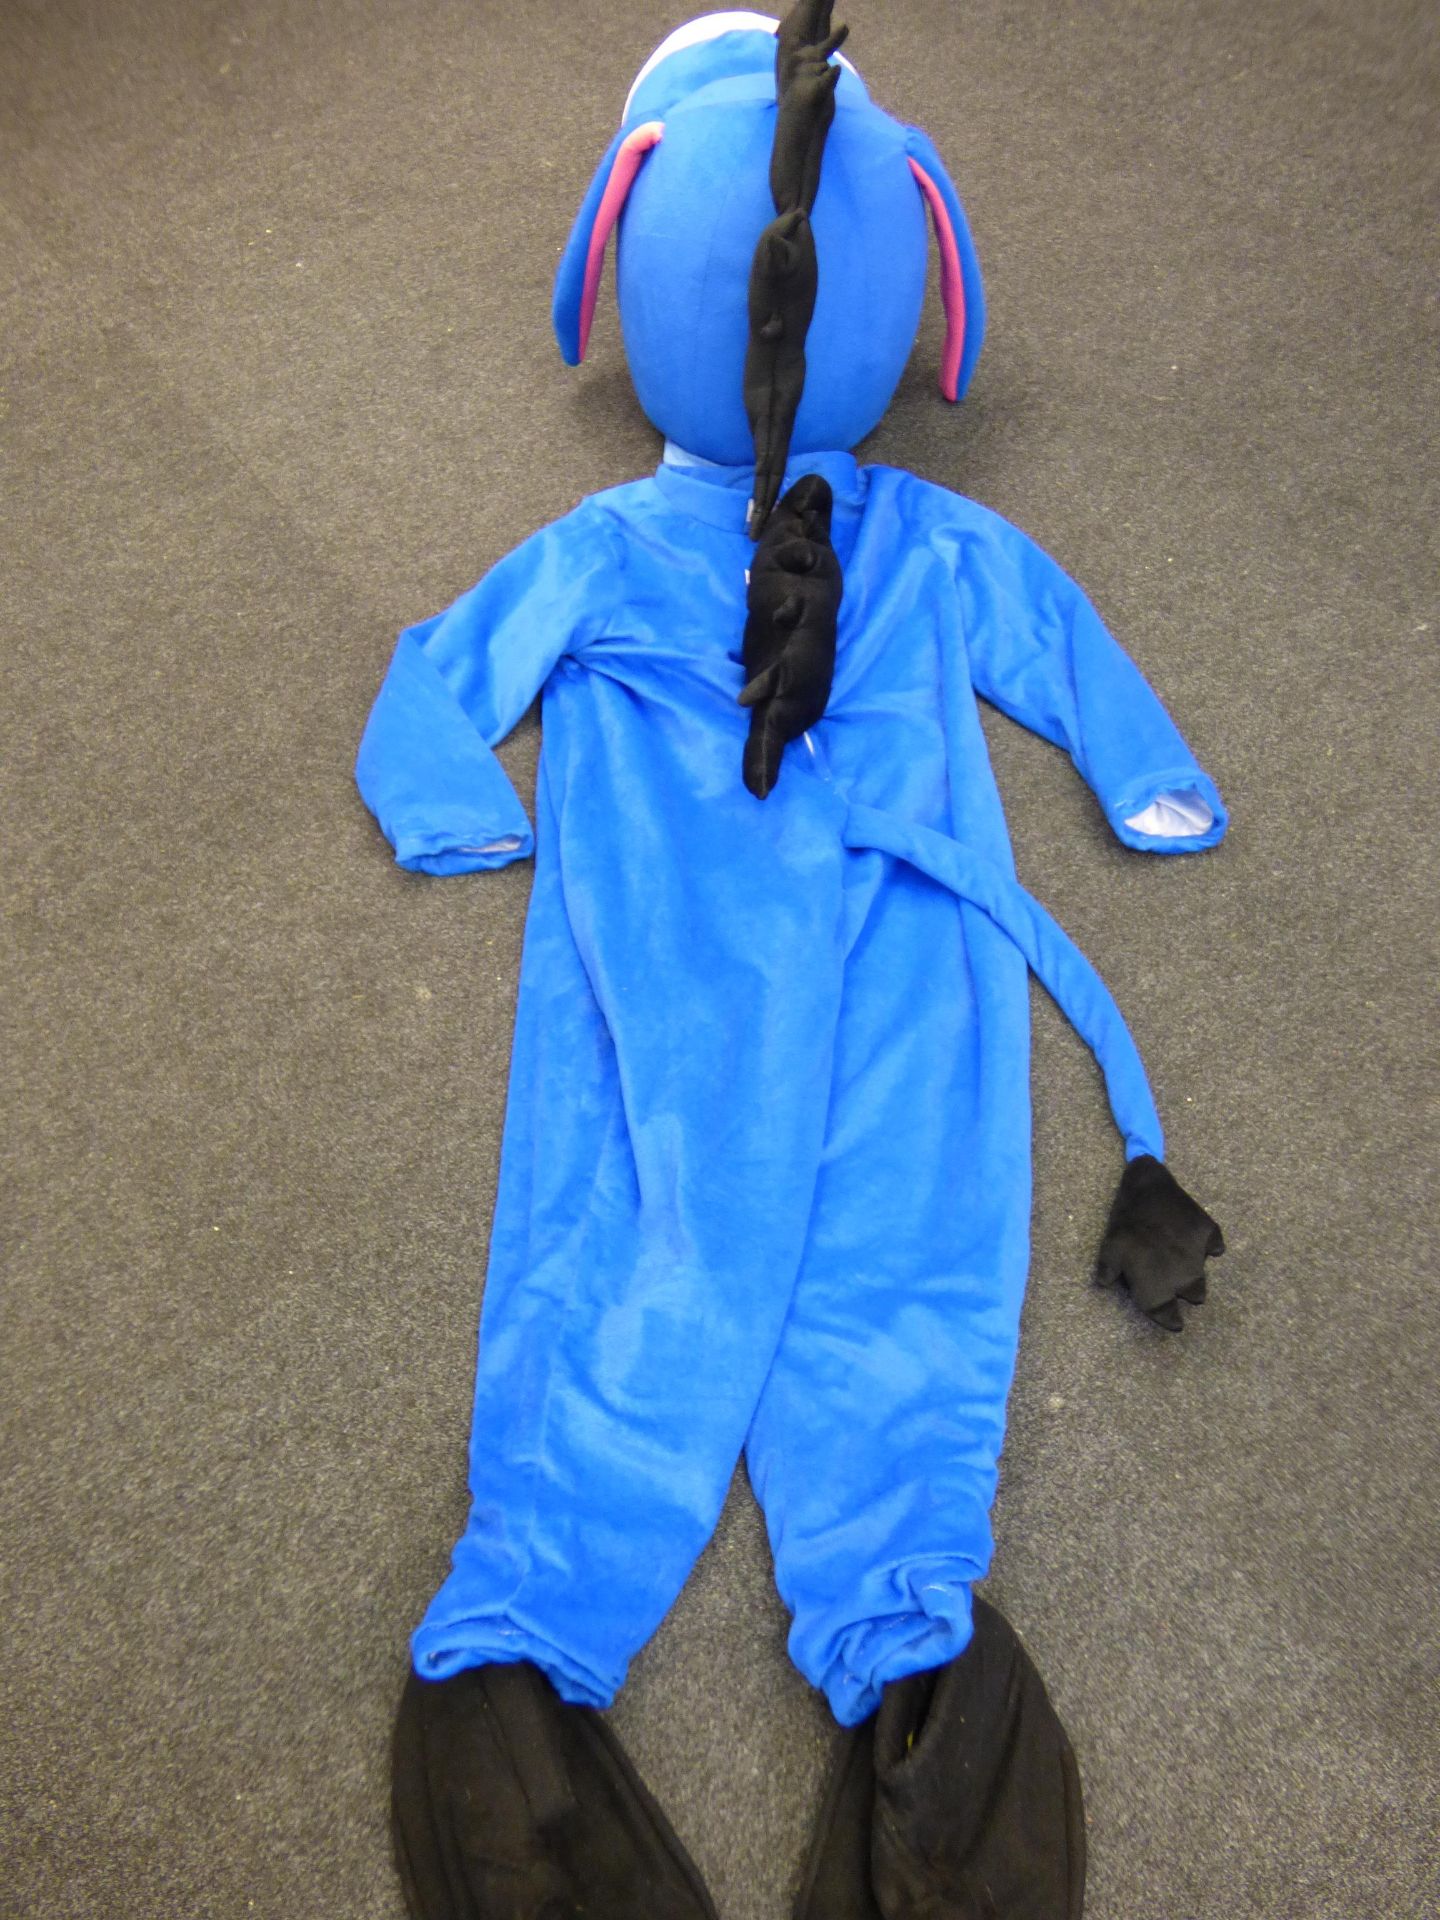 Eeyore 'Disney Style' Costume - Image 2 of 3